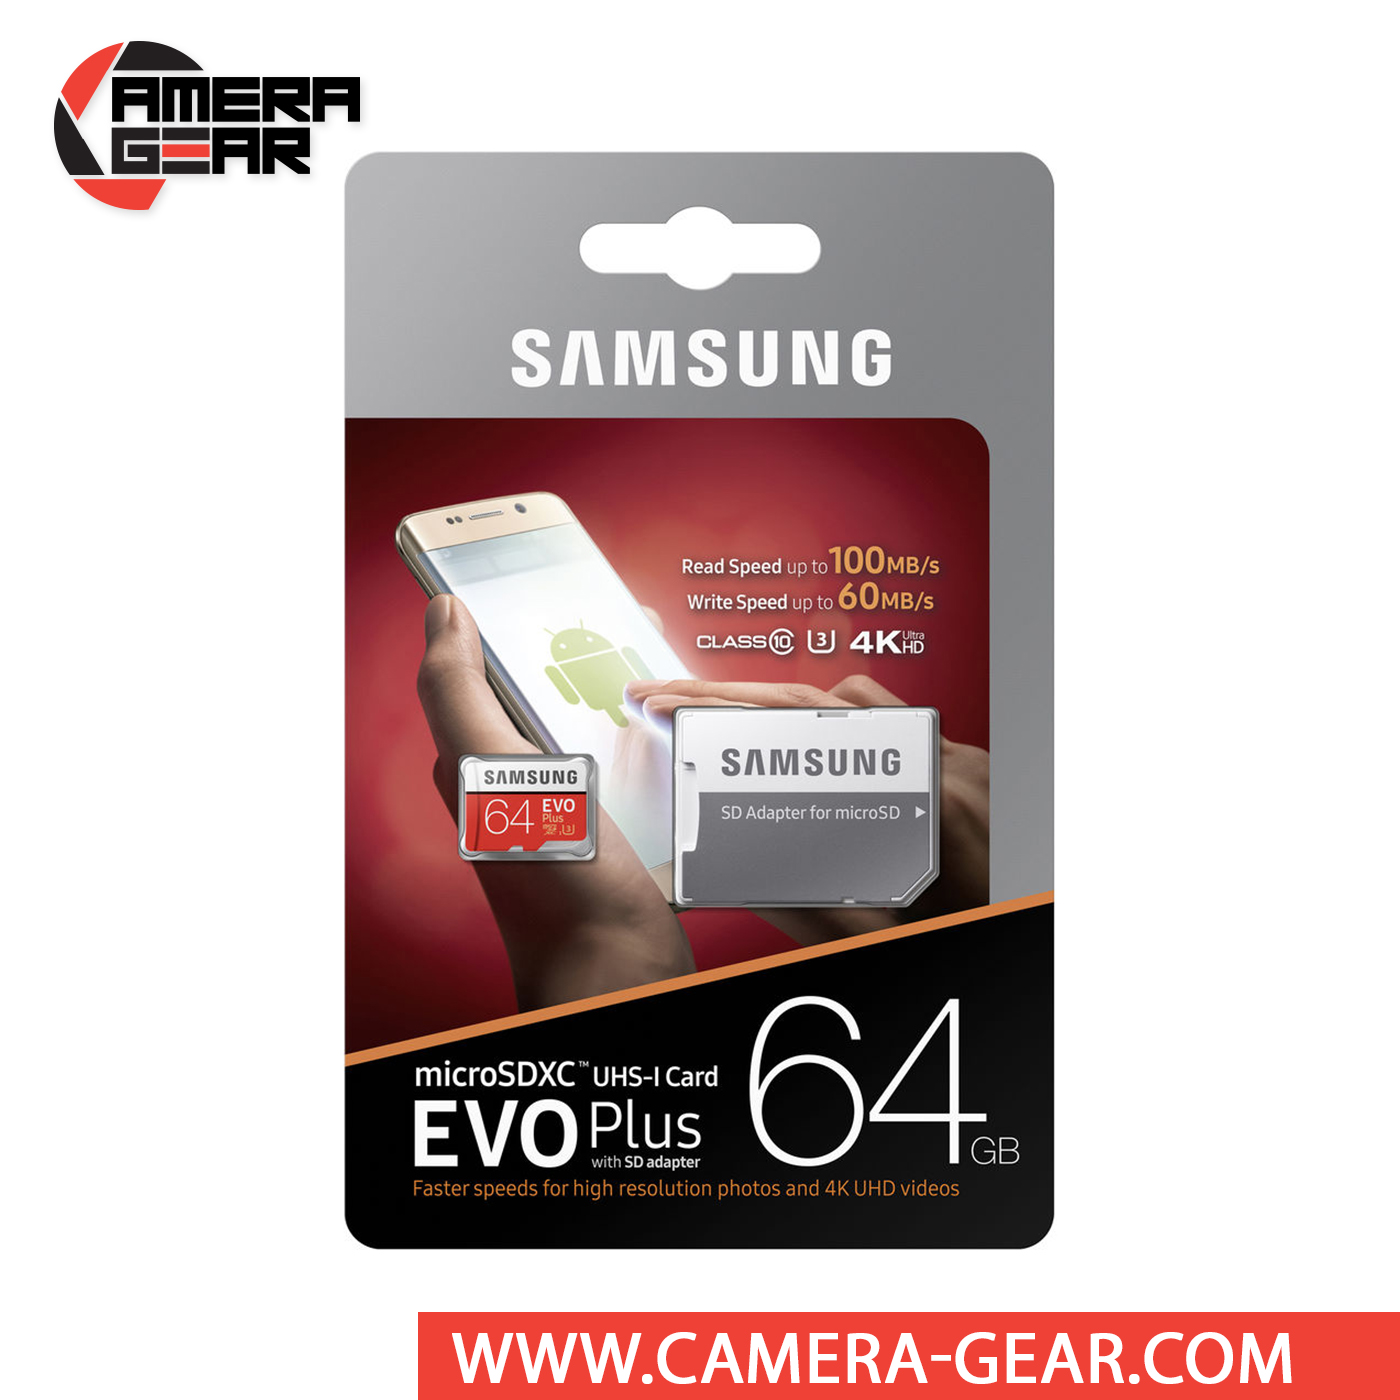 Samsung 64GB EVO Plus UHS-I microSDXC Memory Card with adapter